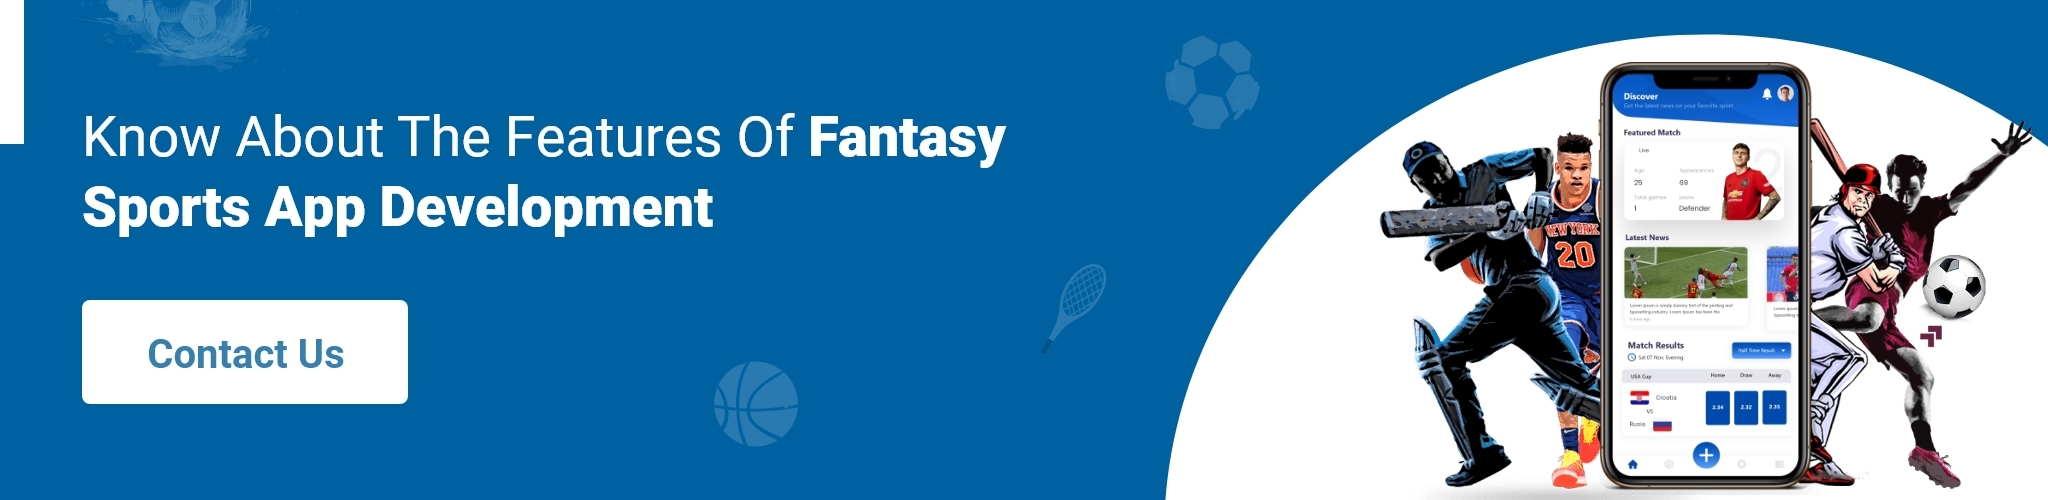 Fantasy Sports Mobile App CTA